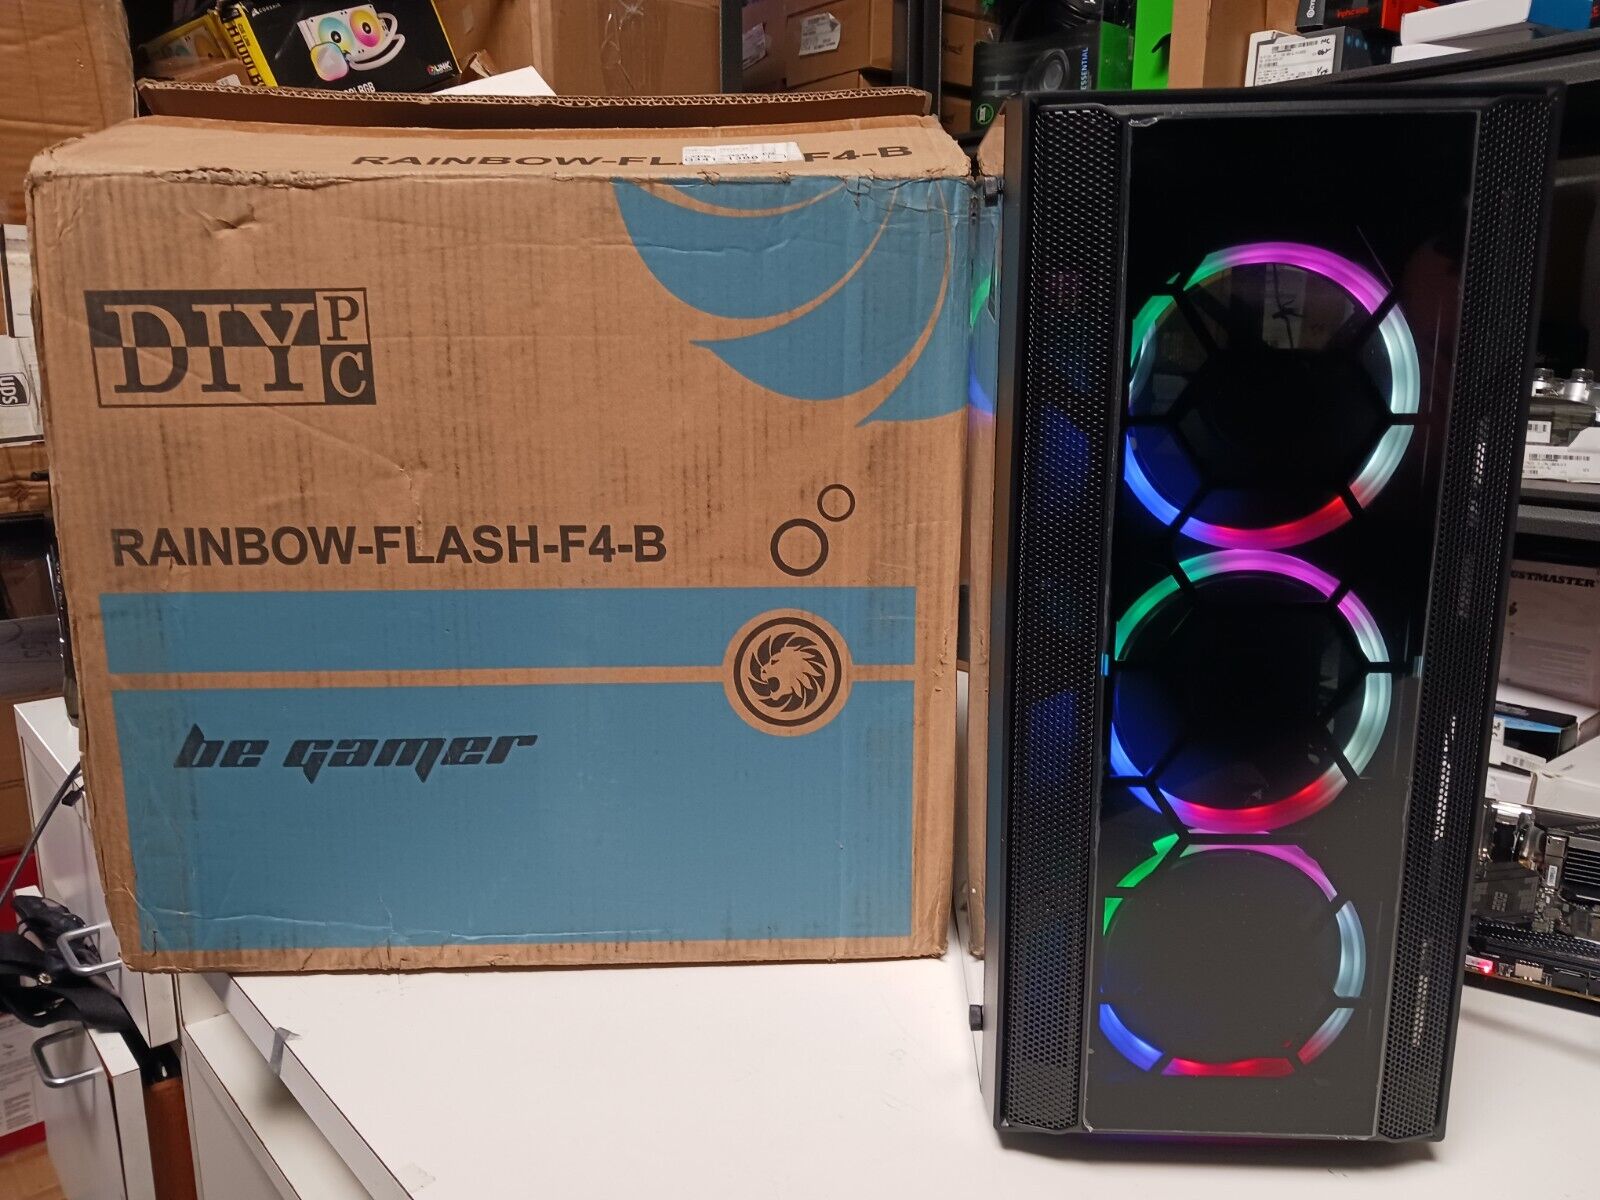 -DIYPC Rainbow-Flash-F4-B Black Steel Tempered Glass ATX Mid Tower Computer Case